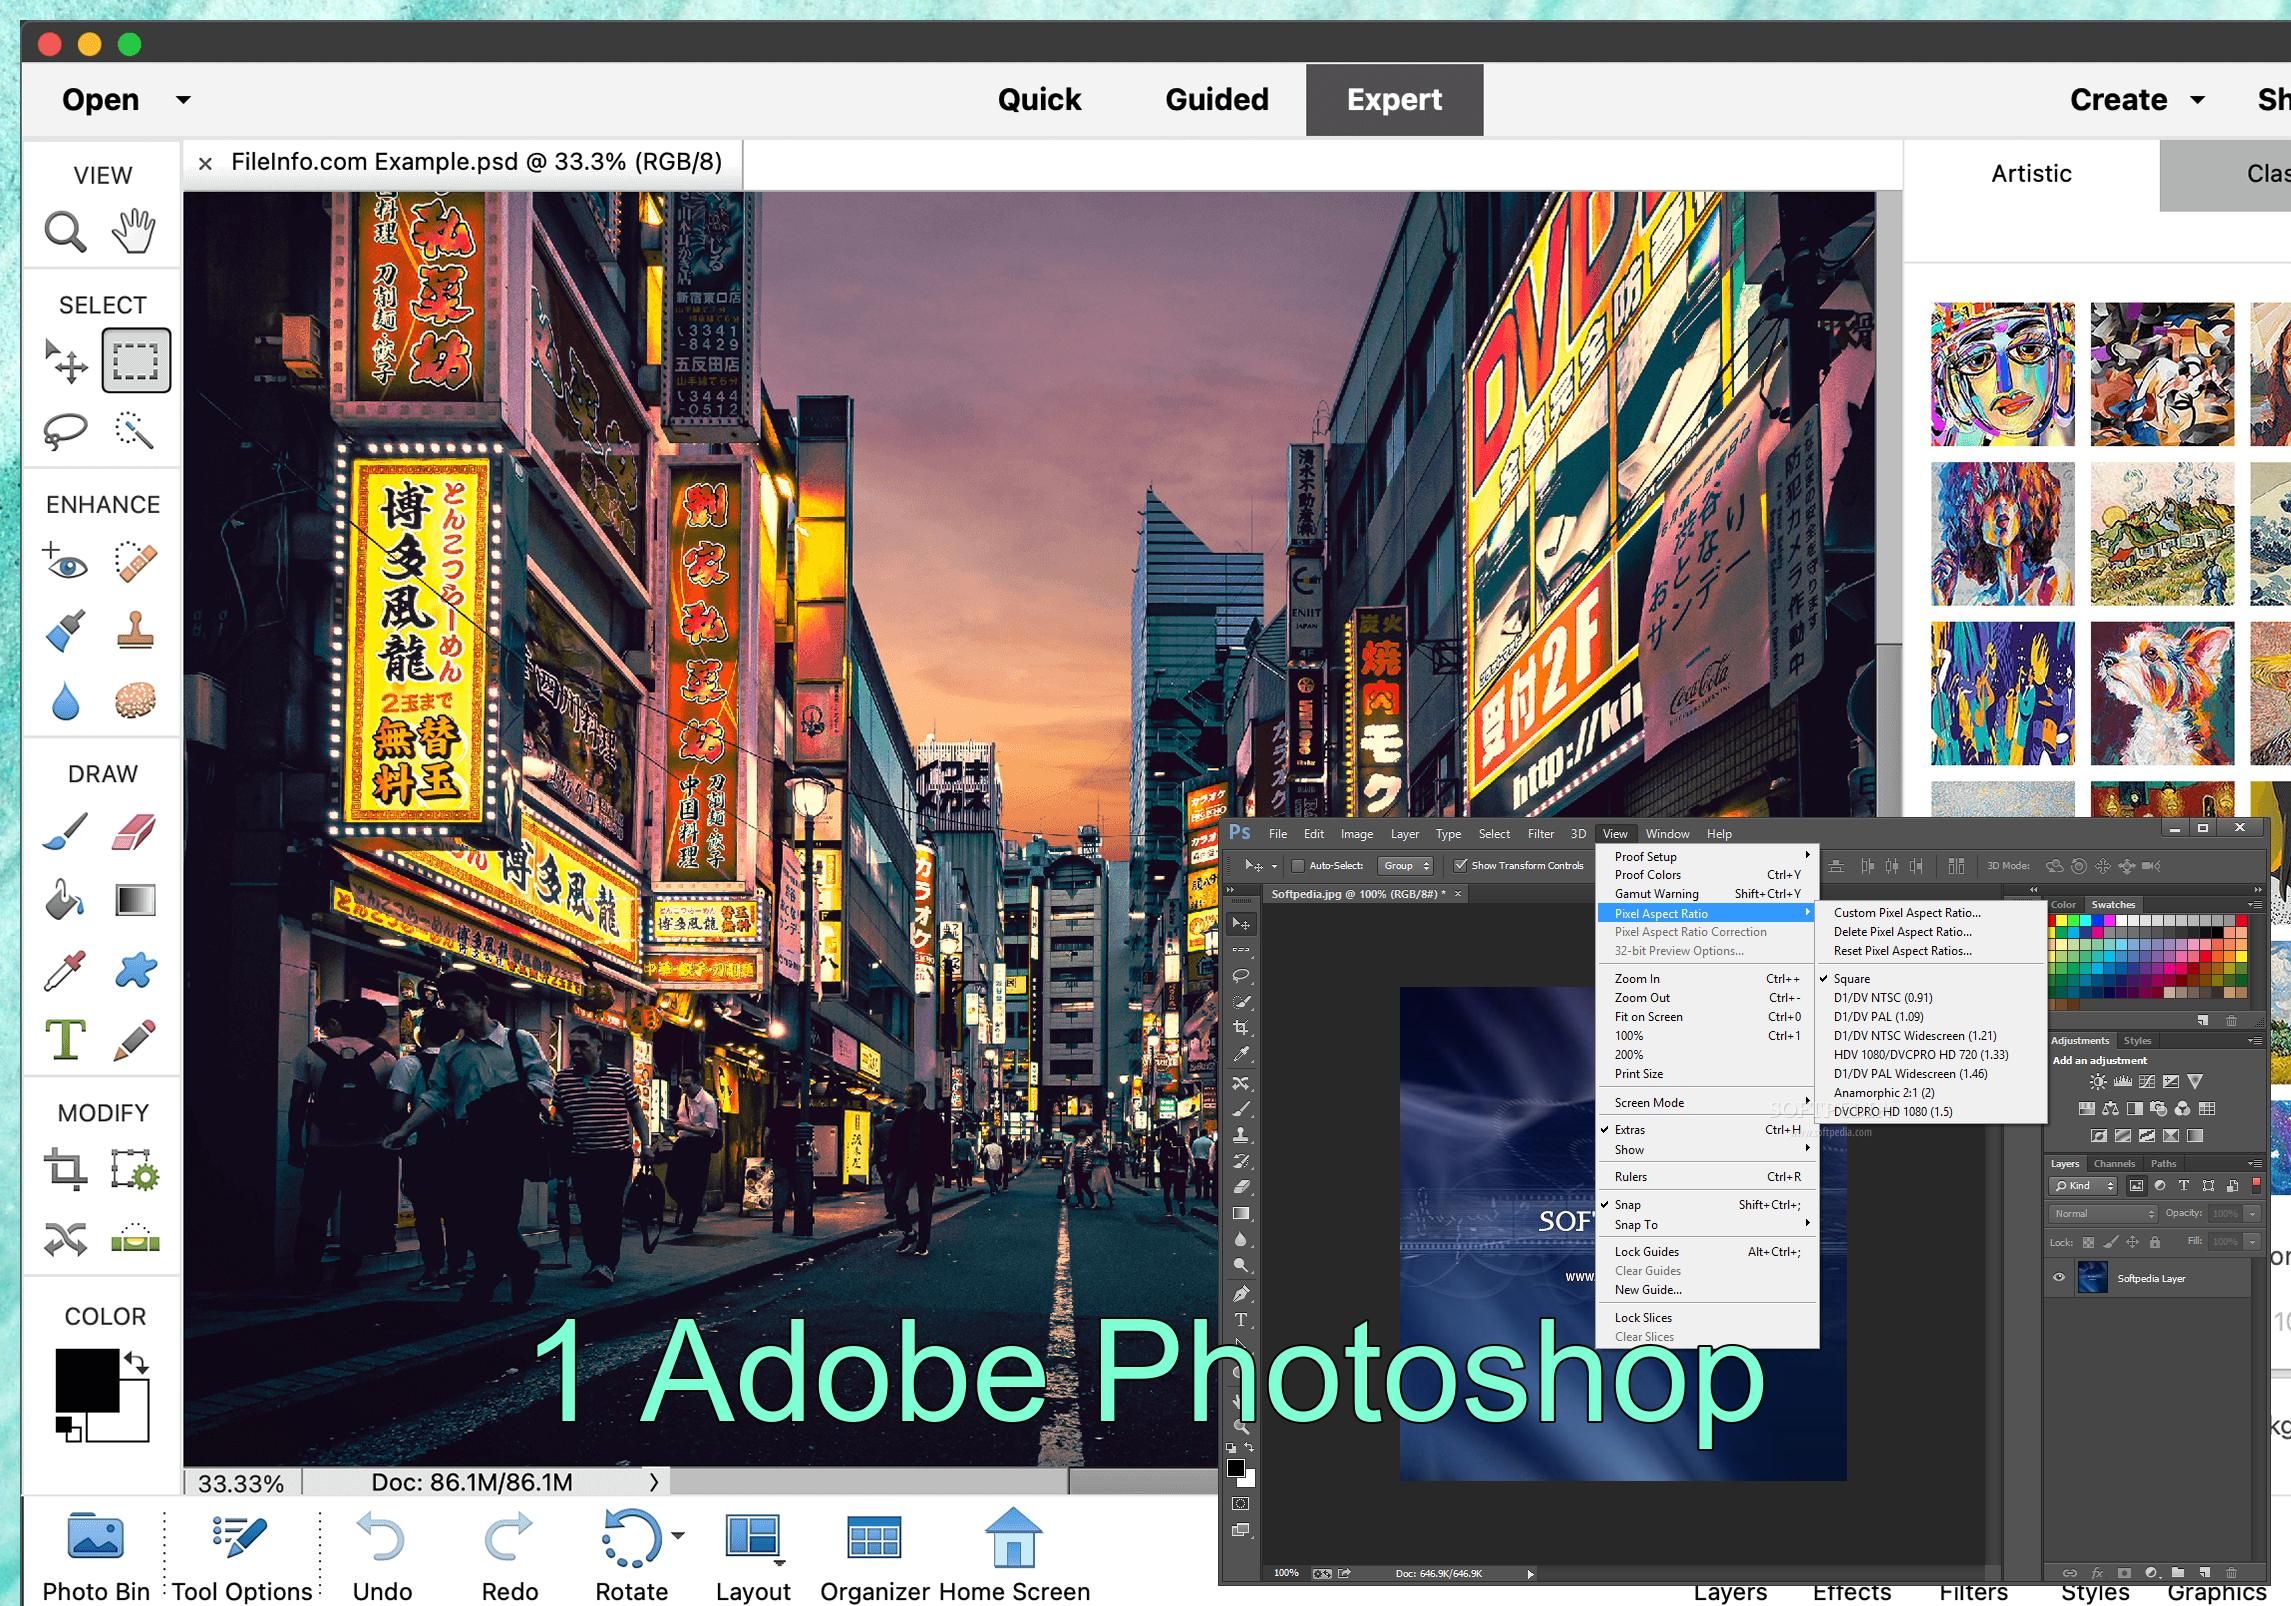 1. Adobe Photoshop..